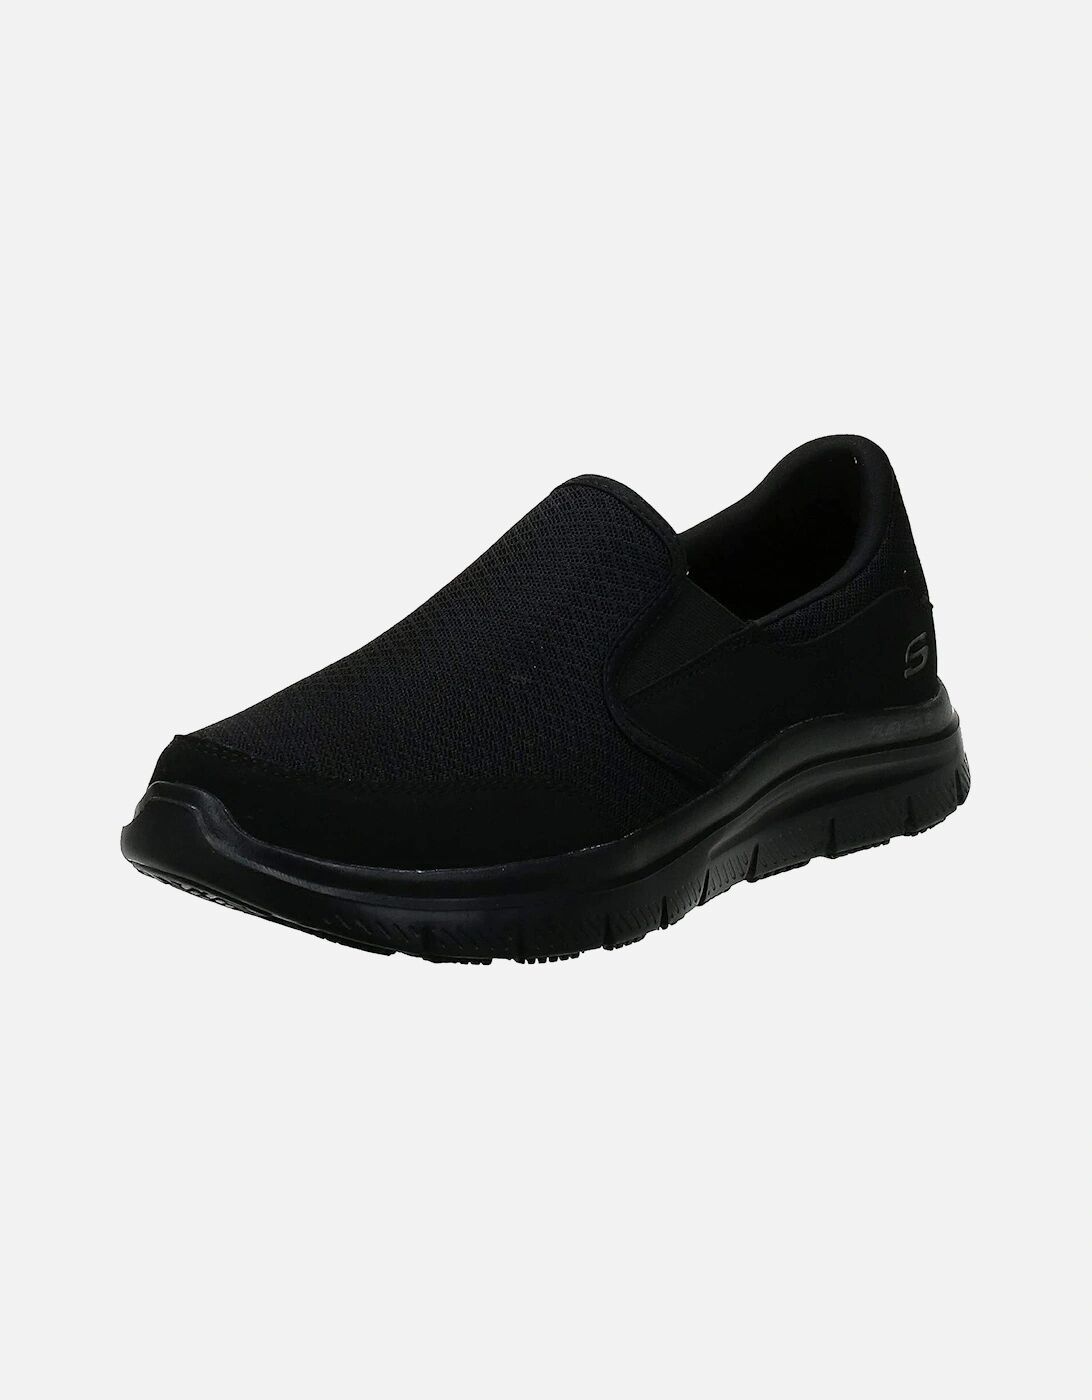 Men's Skechers Mens McAllen Wide Safety Shoes - Black - Size: 9